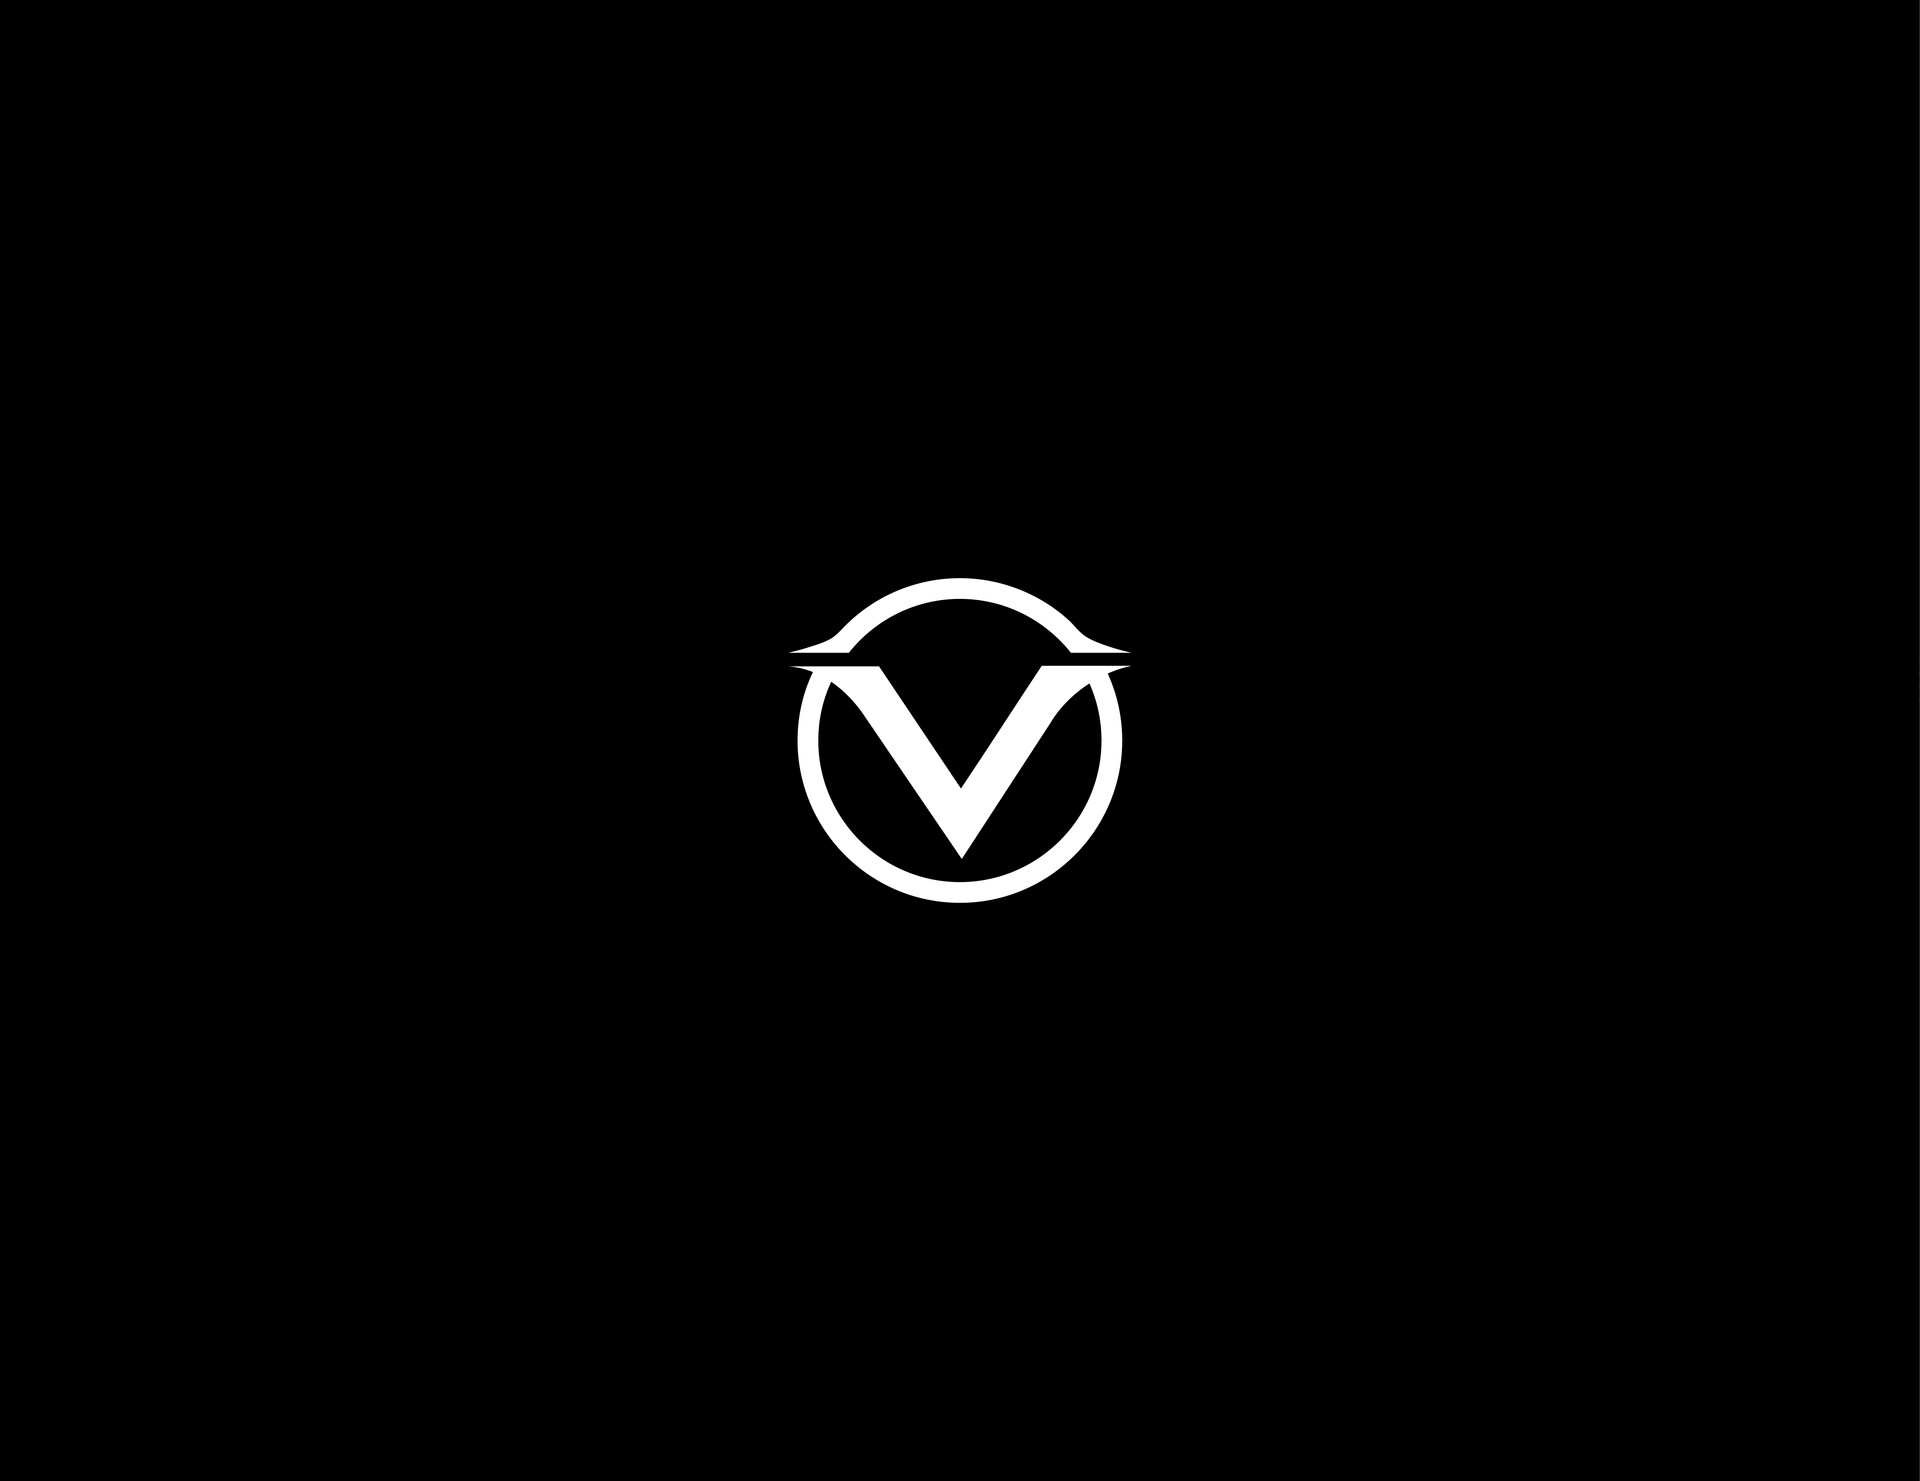 What Car Brand Has a V Shaped Logo?